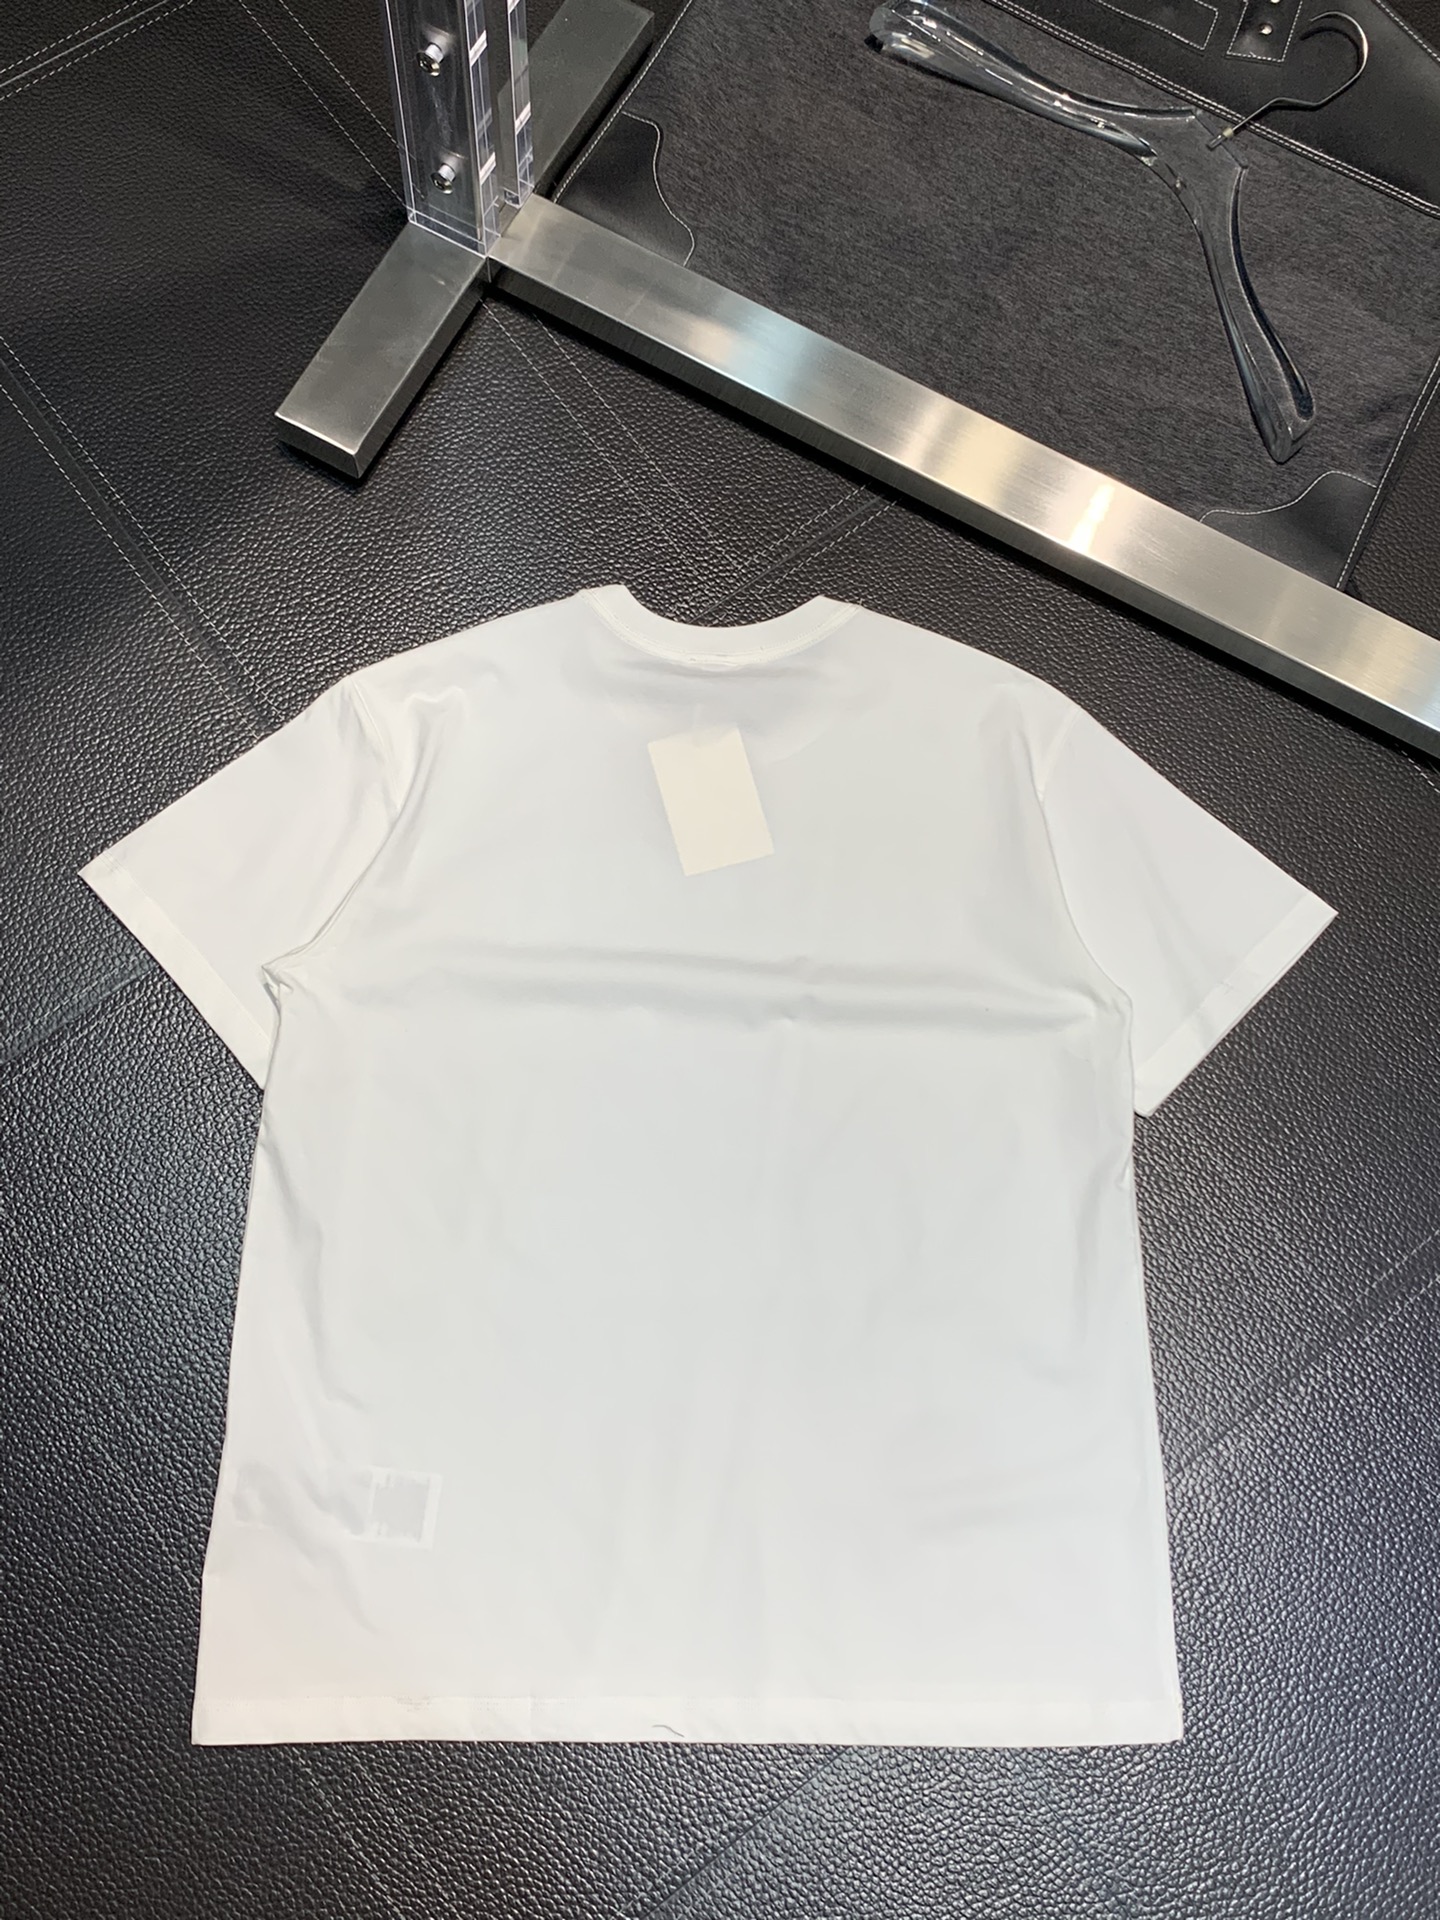 MCQ マックイーンtシャツコピー トップス 短袖 ファッション 純綿 柔らかい ゆったり メンズ 2色可選_5